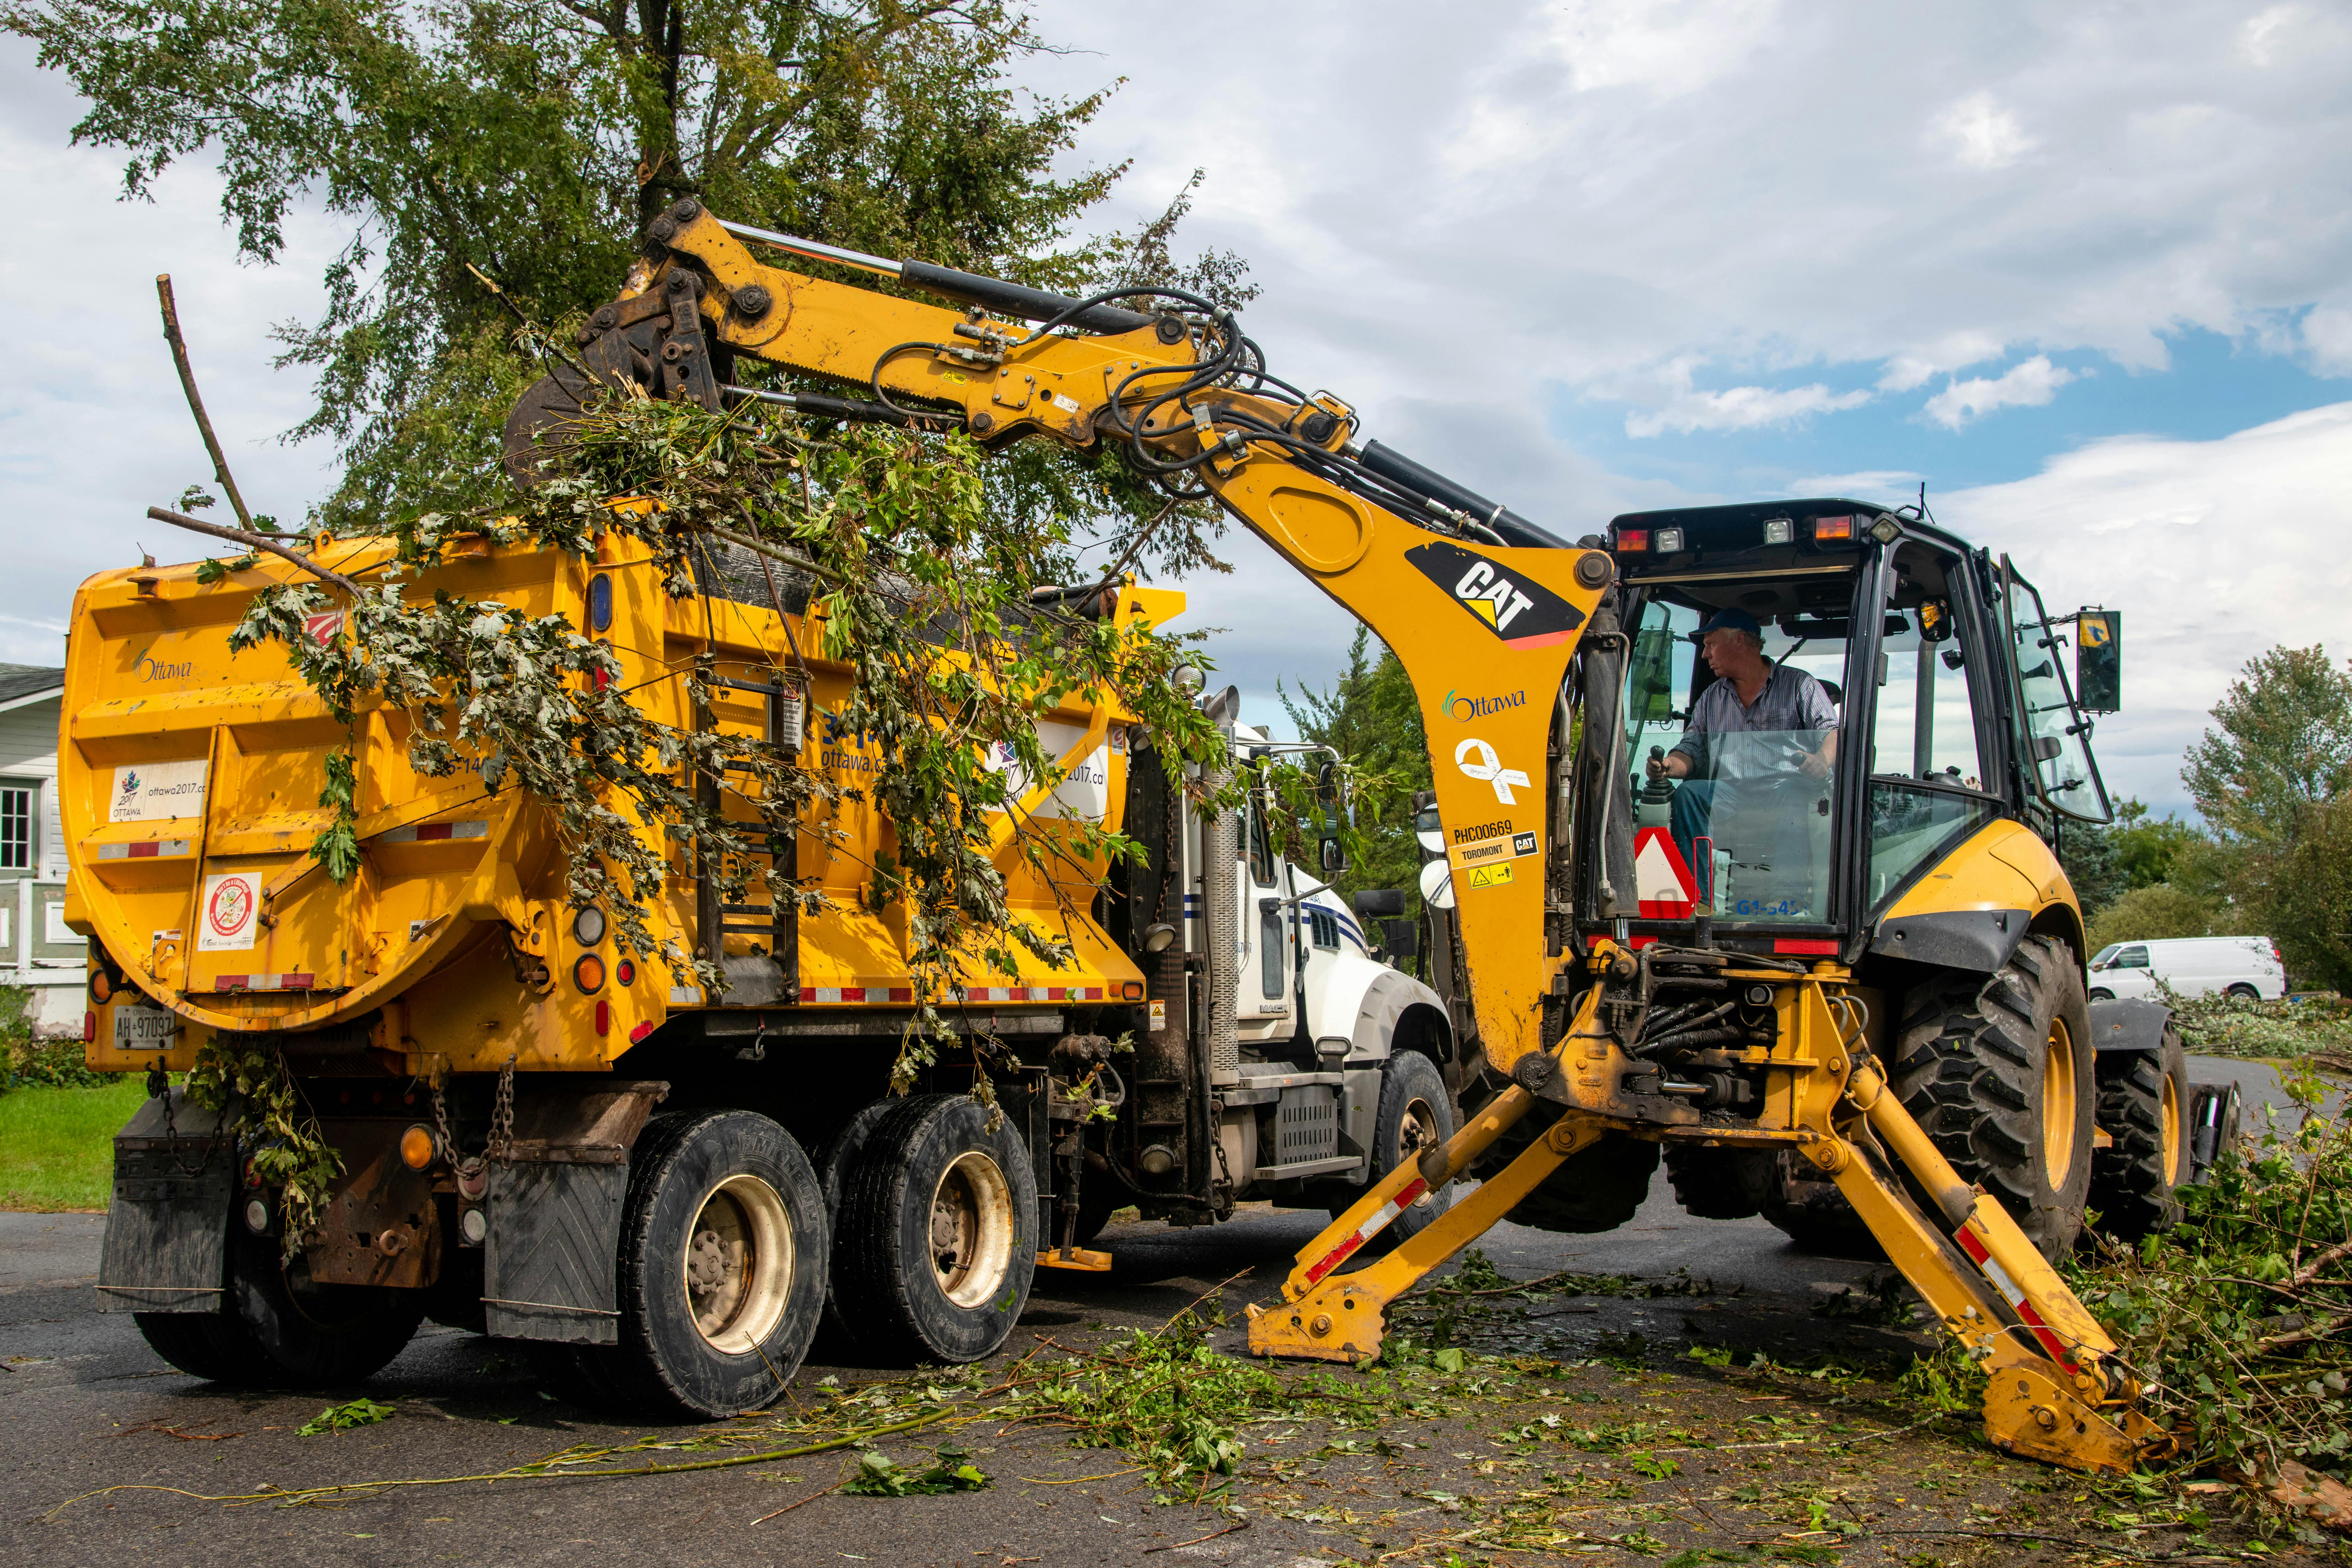 City machinery removing debris post tornado